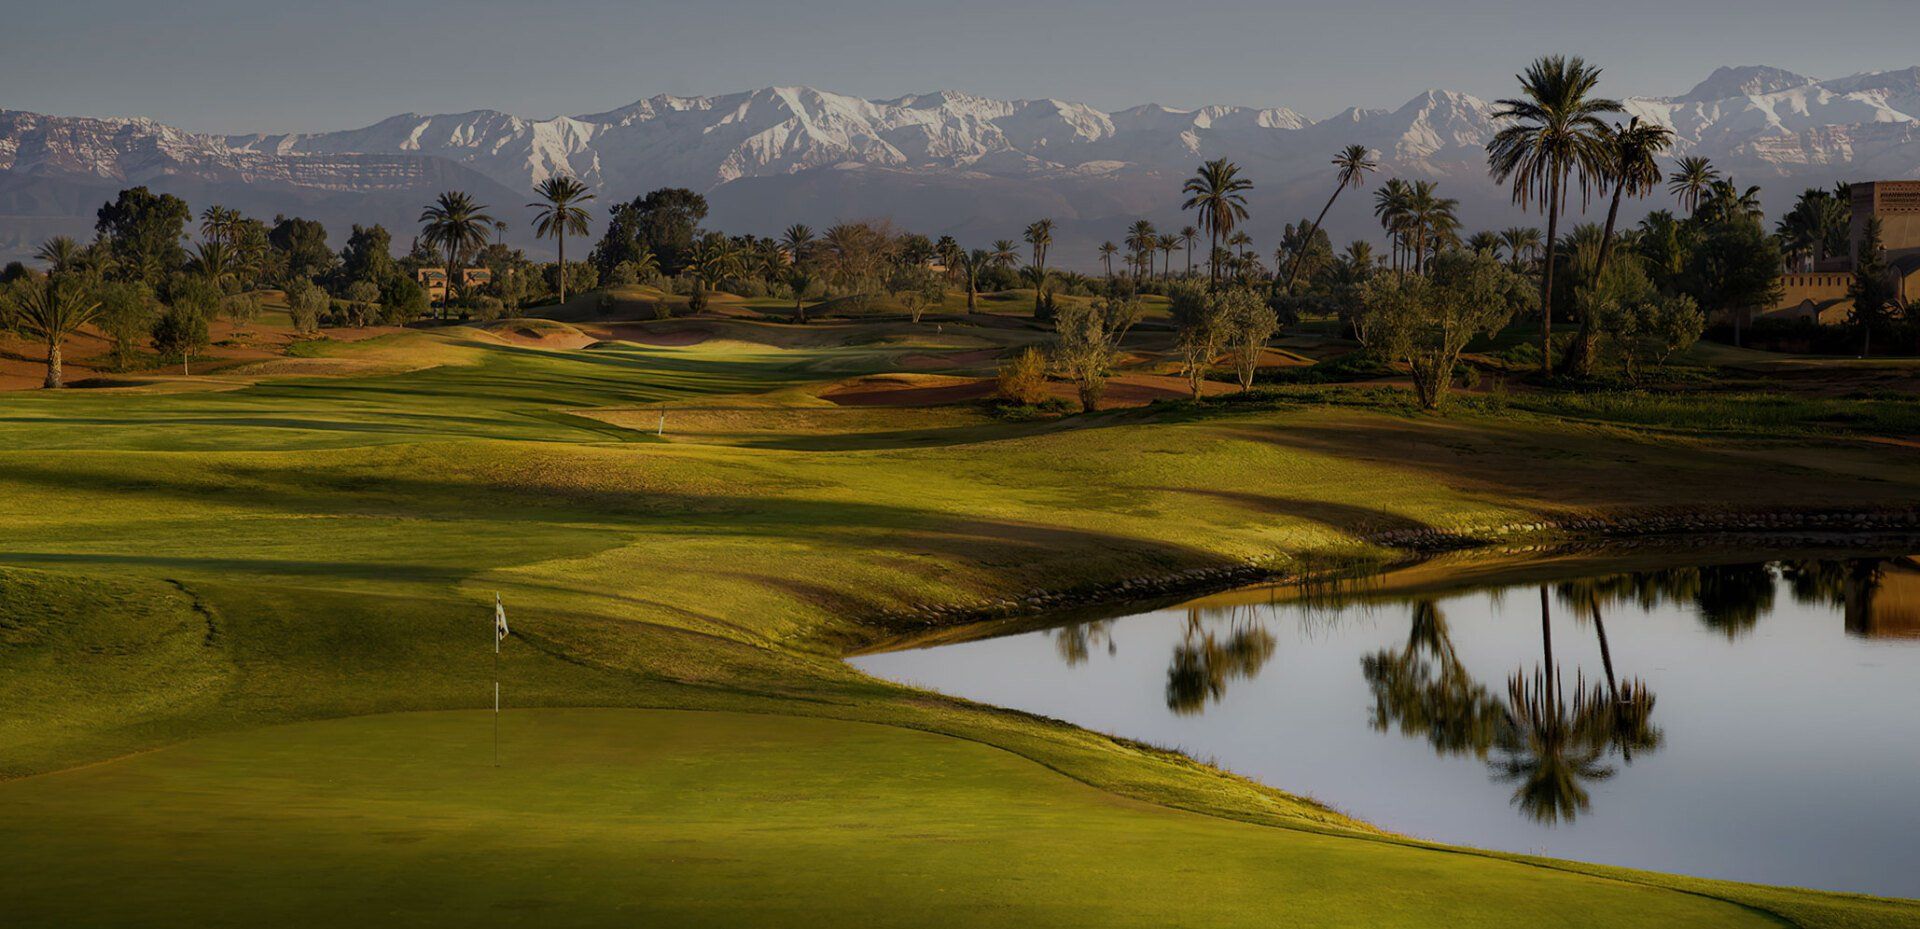 Privilège Location Marrakech Villas & Golf